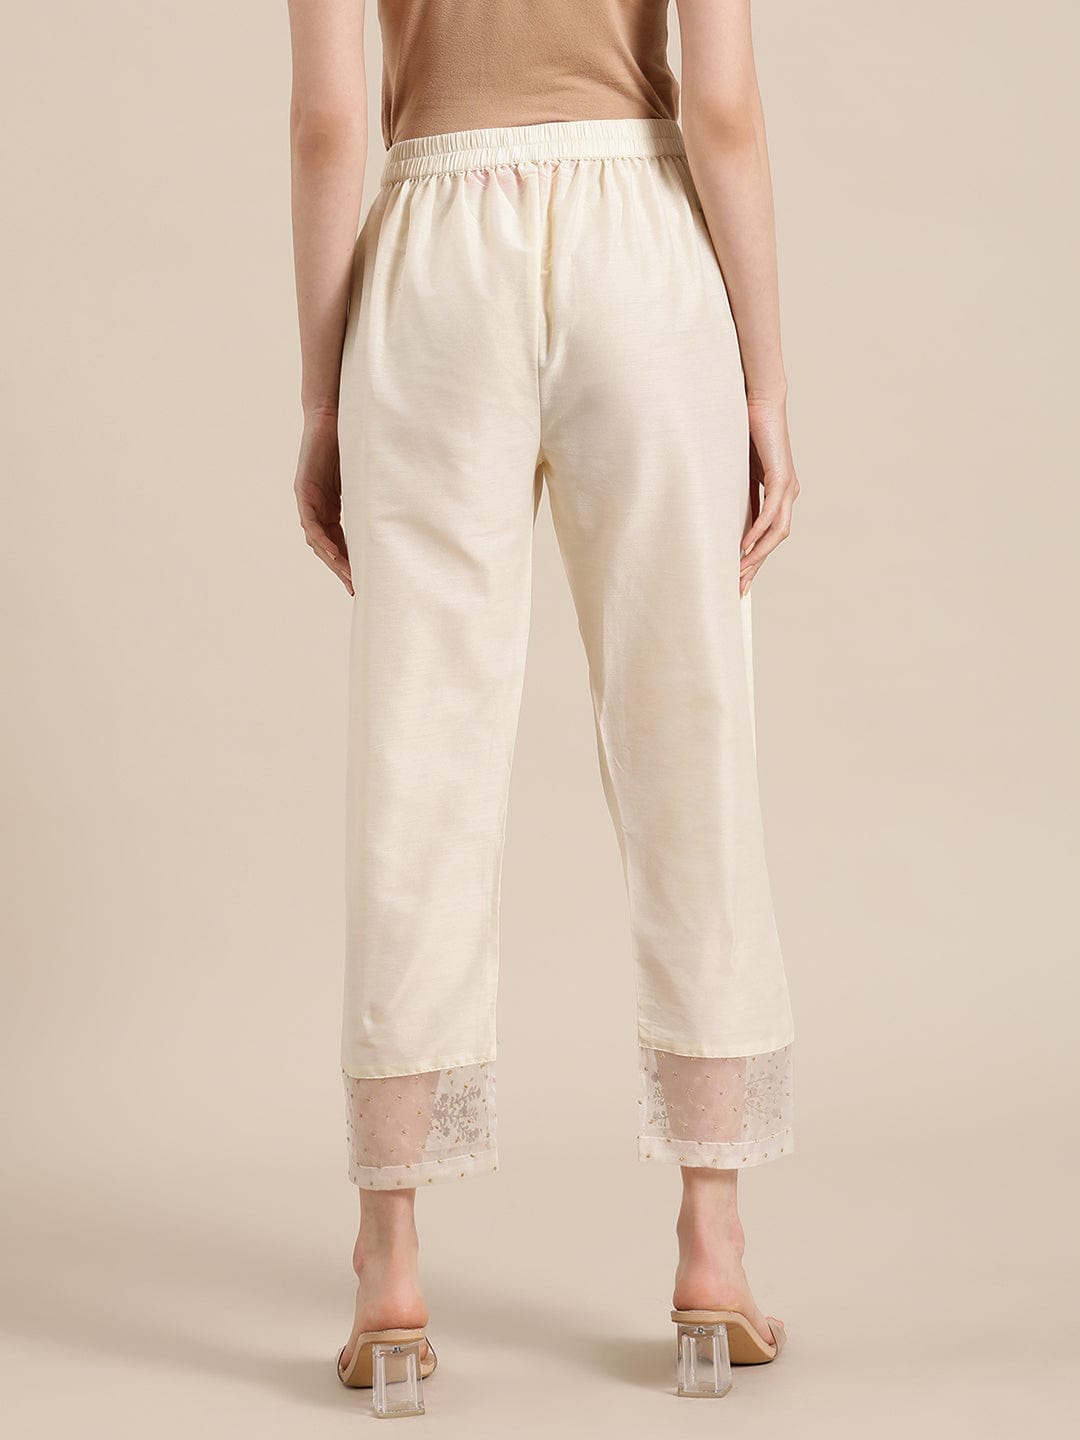 Buy Women White Trousers online in India  Akshalifestyle